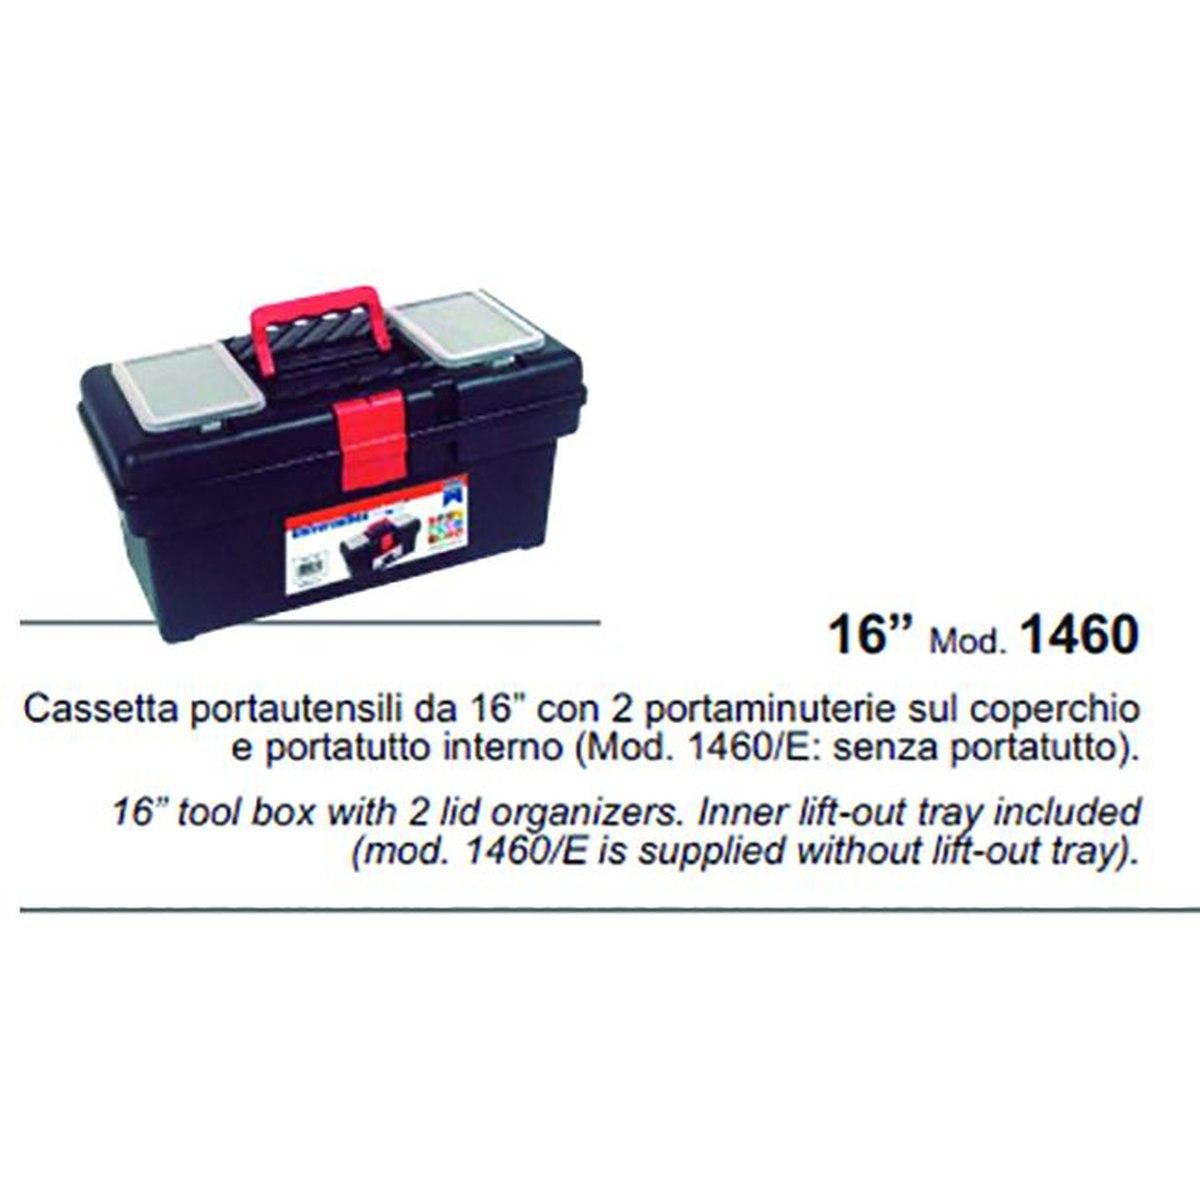 Cassetta portautensili pp art. 1460 42x22x20